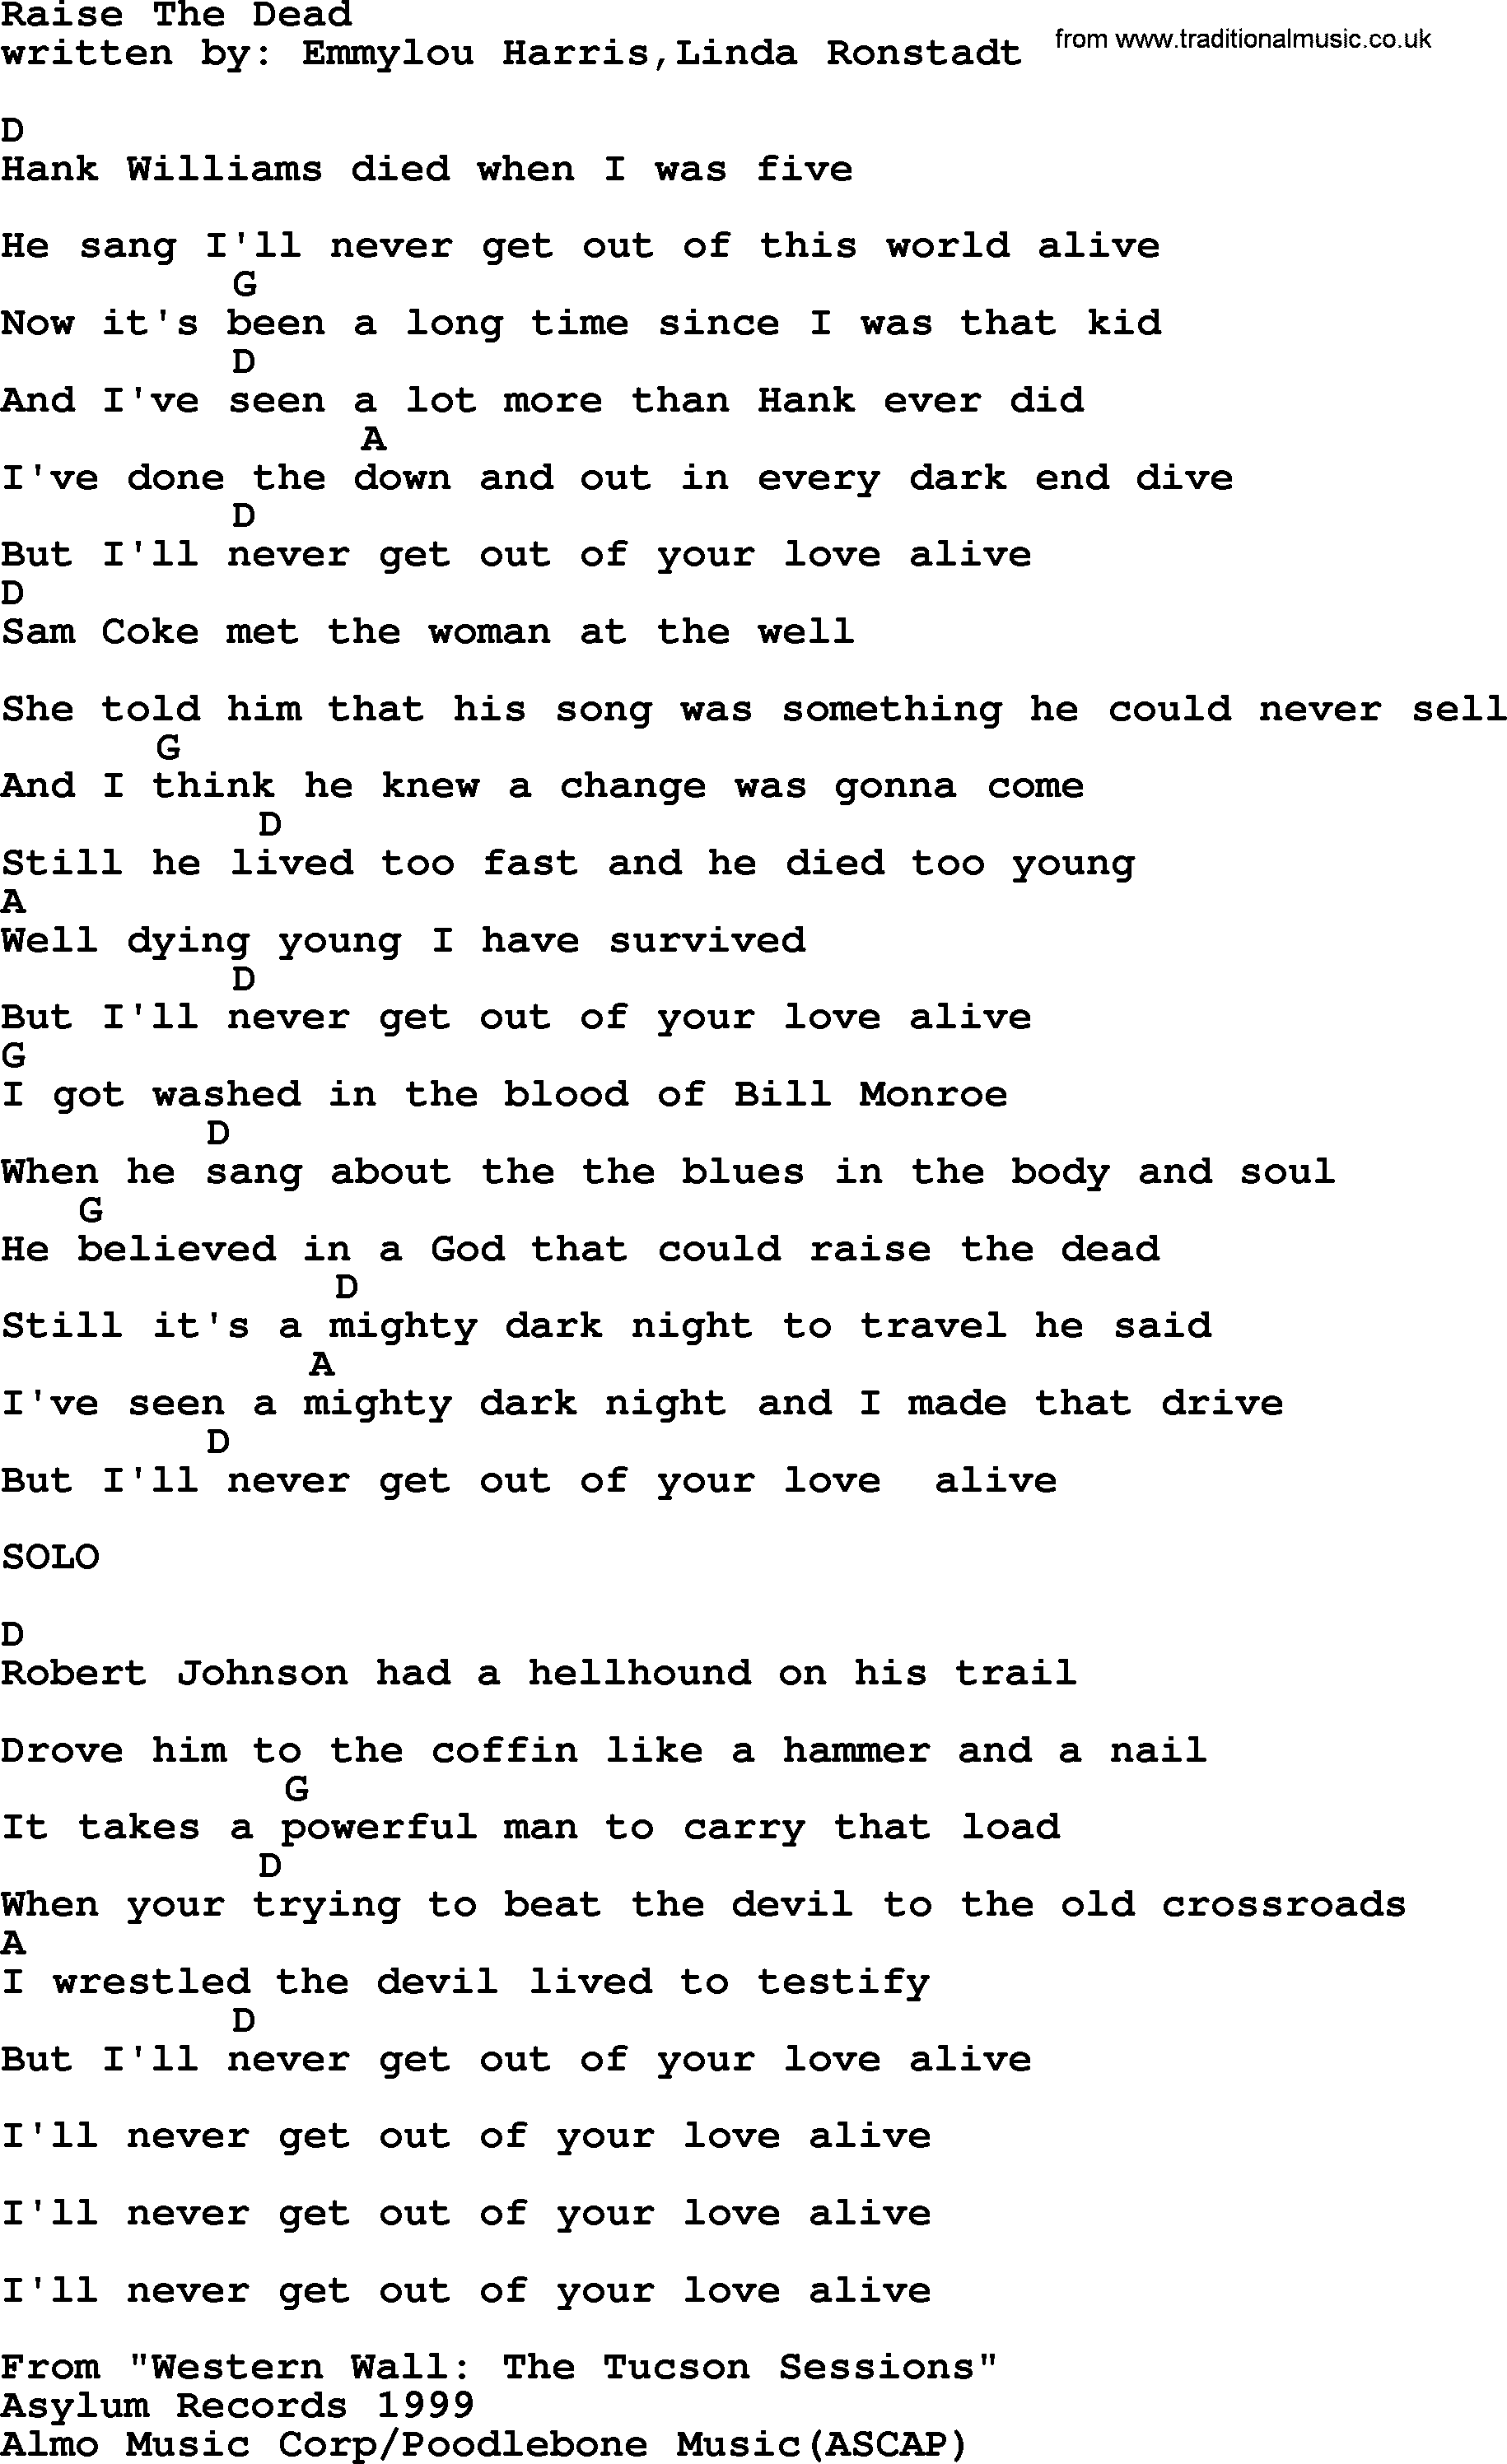 Emmylou Harris song: Raise The Dead lyrics and chords